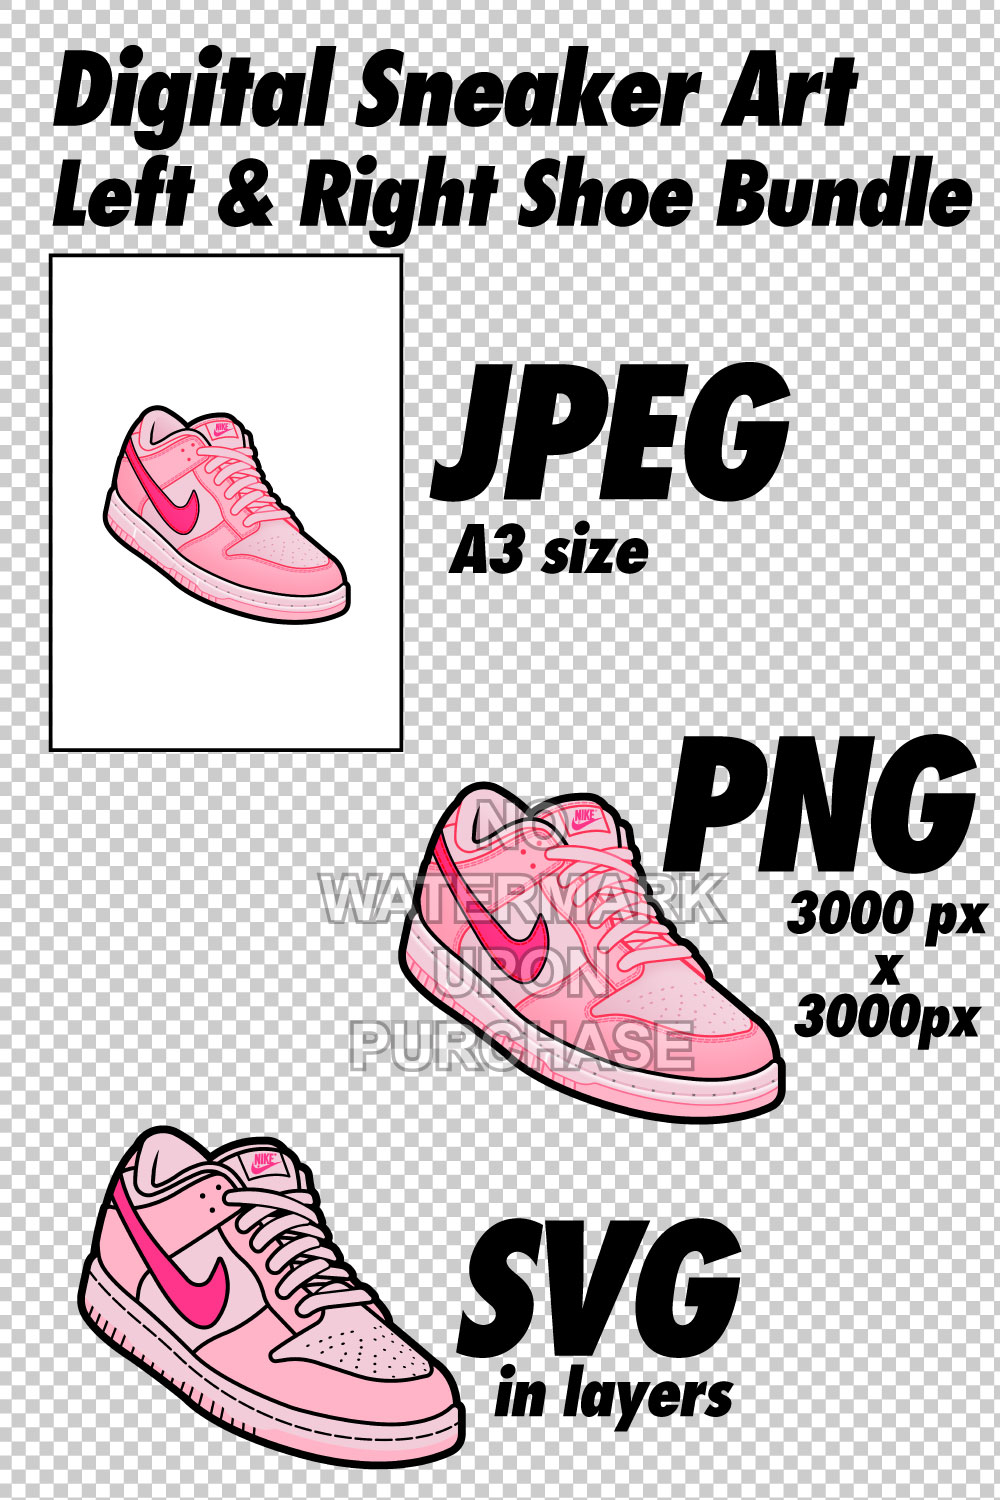 Dunk Low Triple Pink JPEG PNG SVG Sneaker Art right & left shoe bundle Digital Download pinterest preview image.